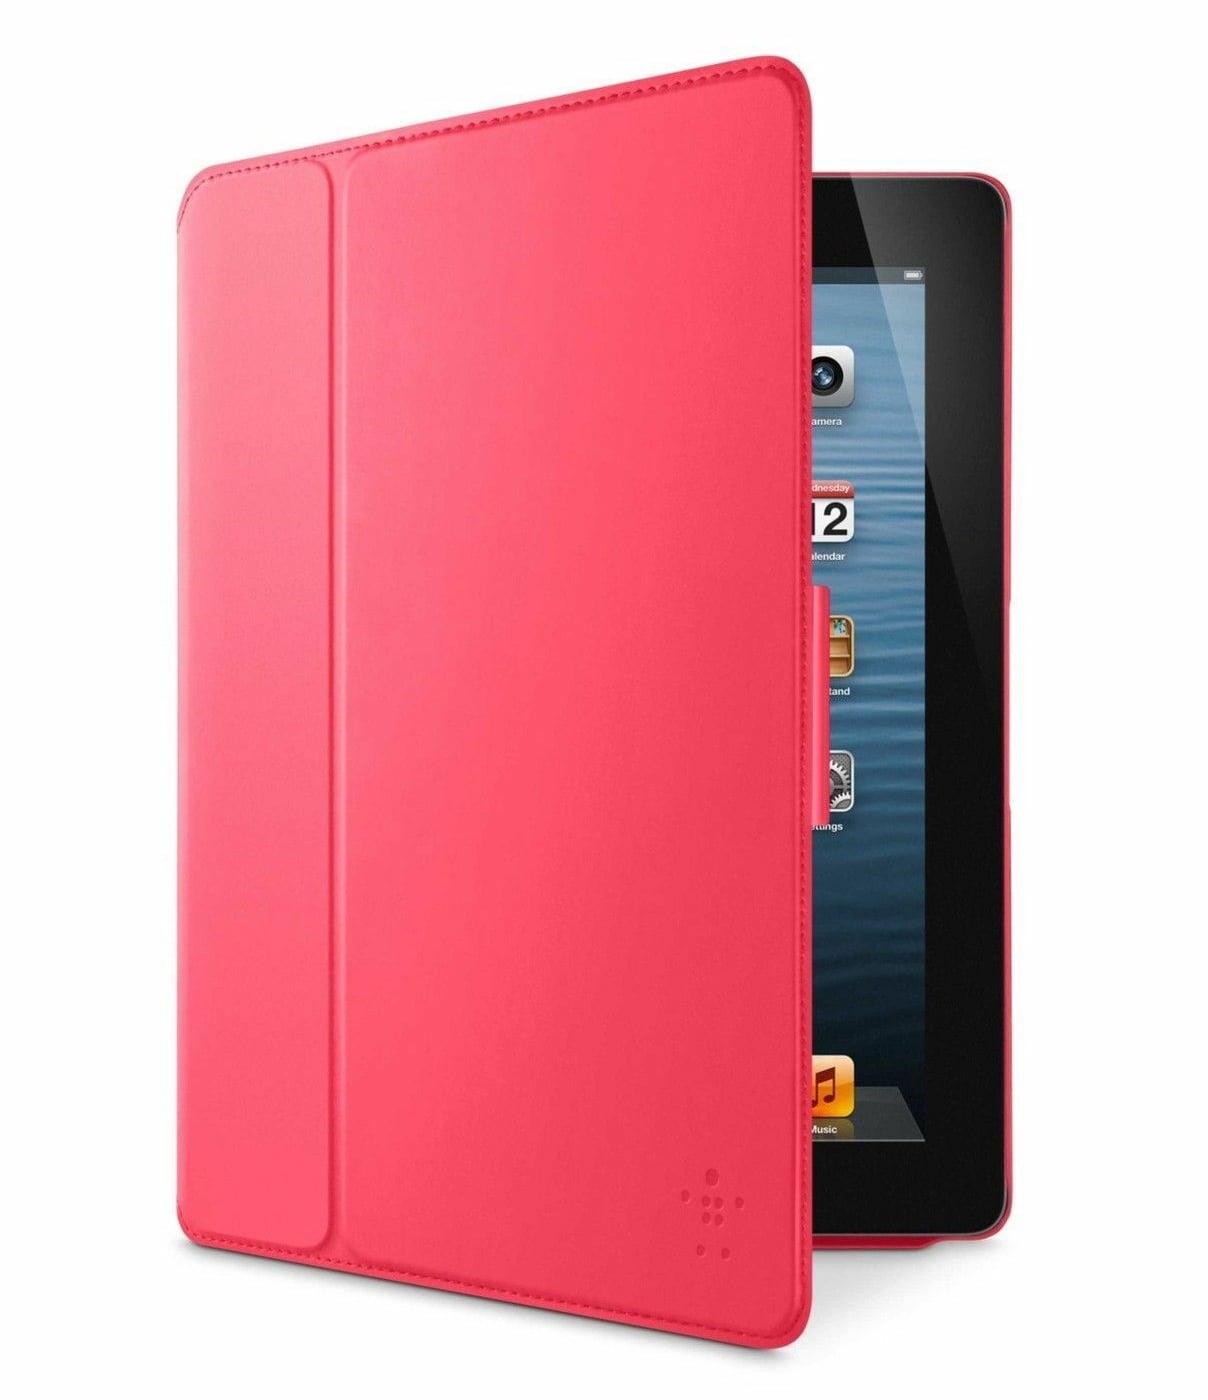 Verplaatsbaar verdacht pasta Belkin FormFit Protective Smart Case Cover with Stand for iPad 2nd, 3rd,  4th Generation (Pink) - Walmart.com